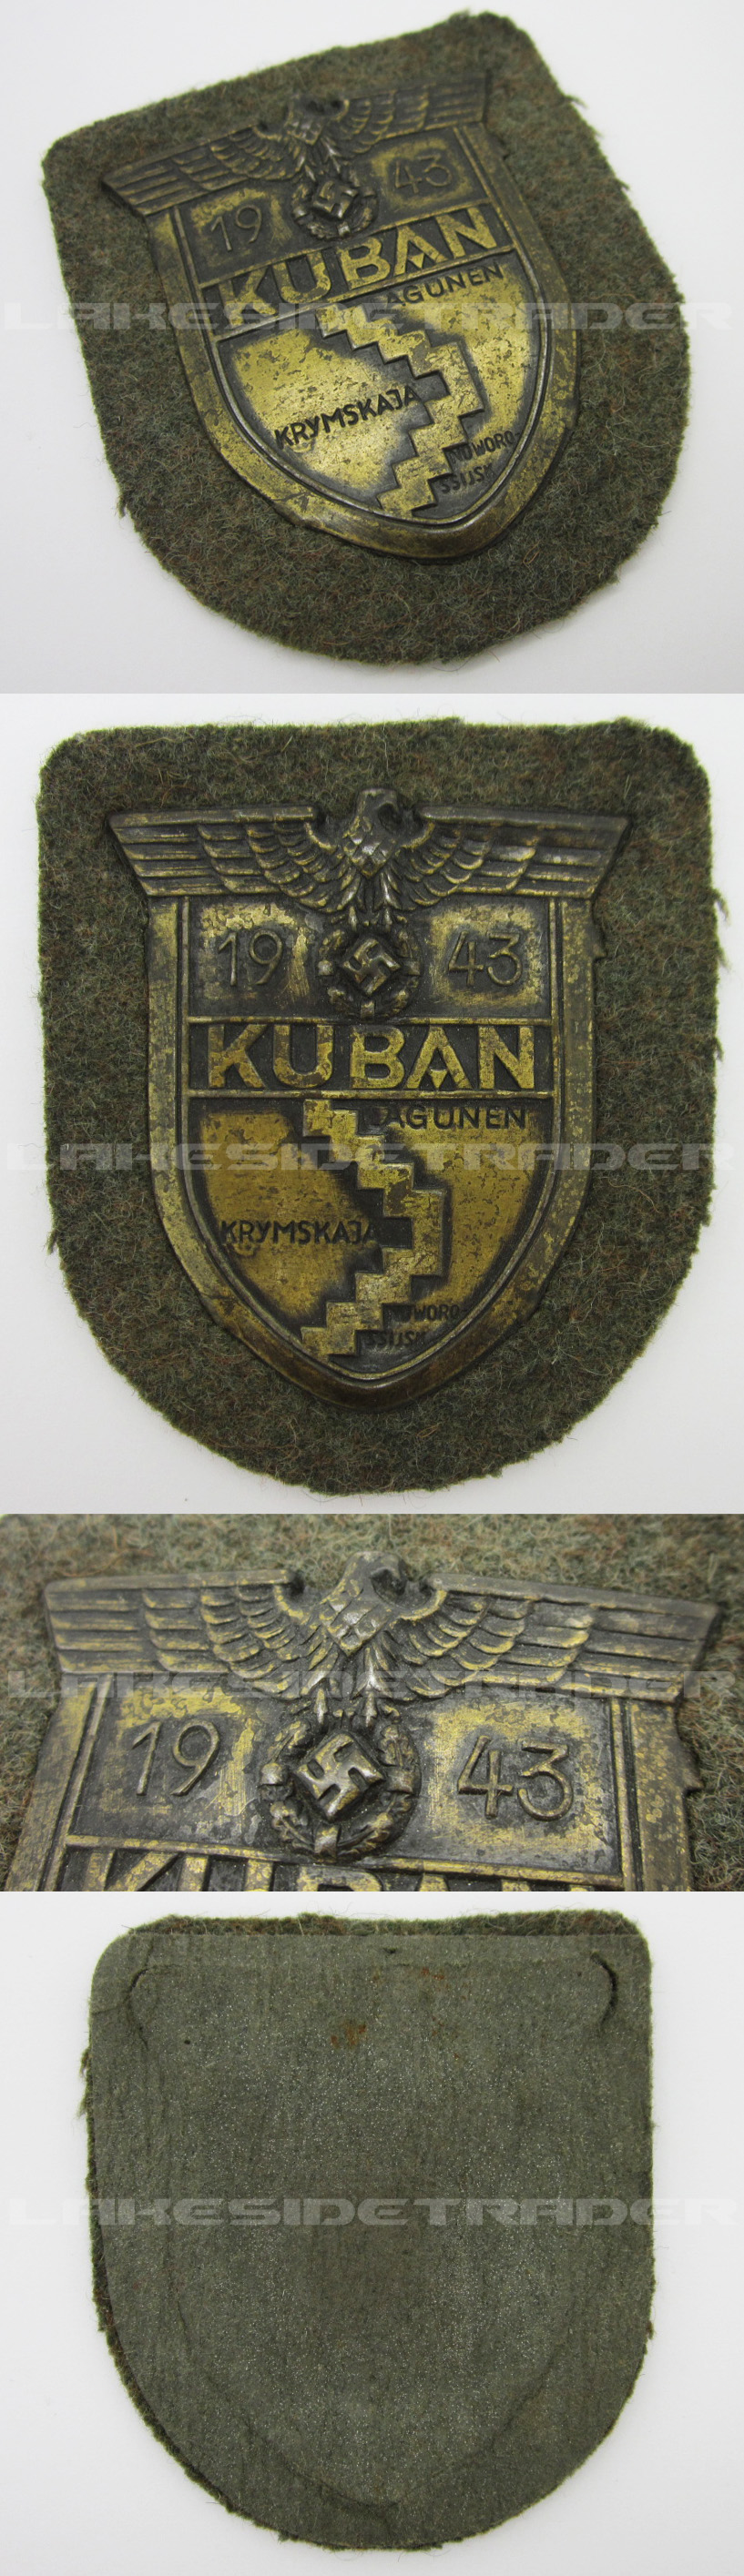 Kuban Arm Shield